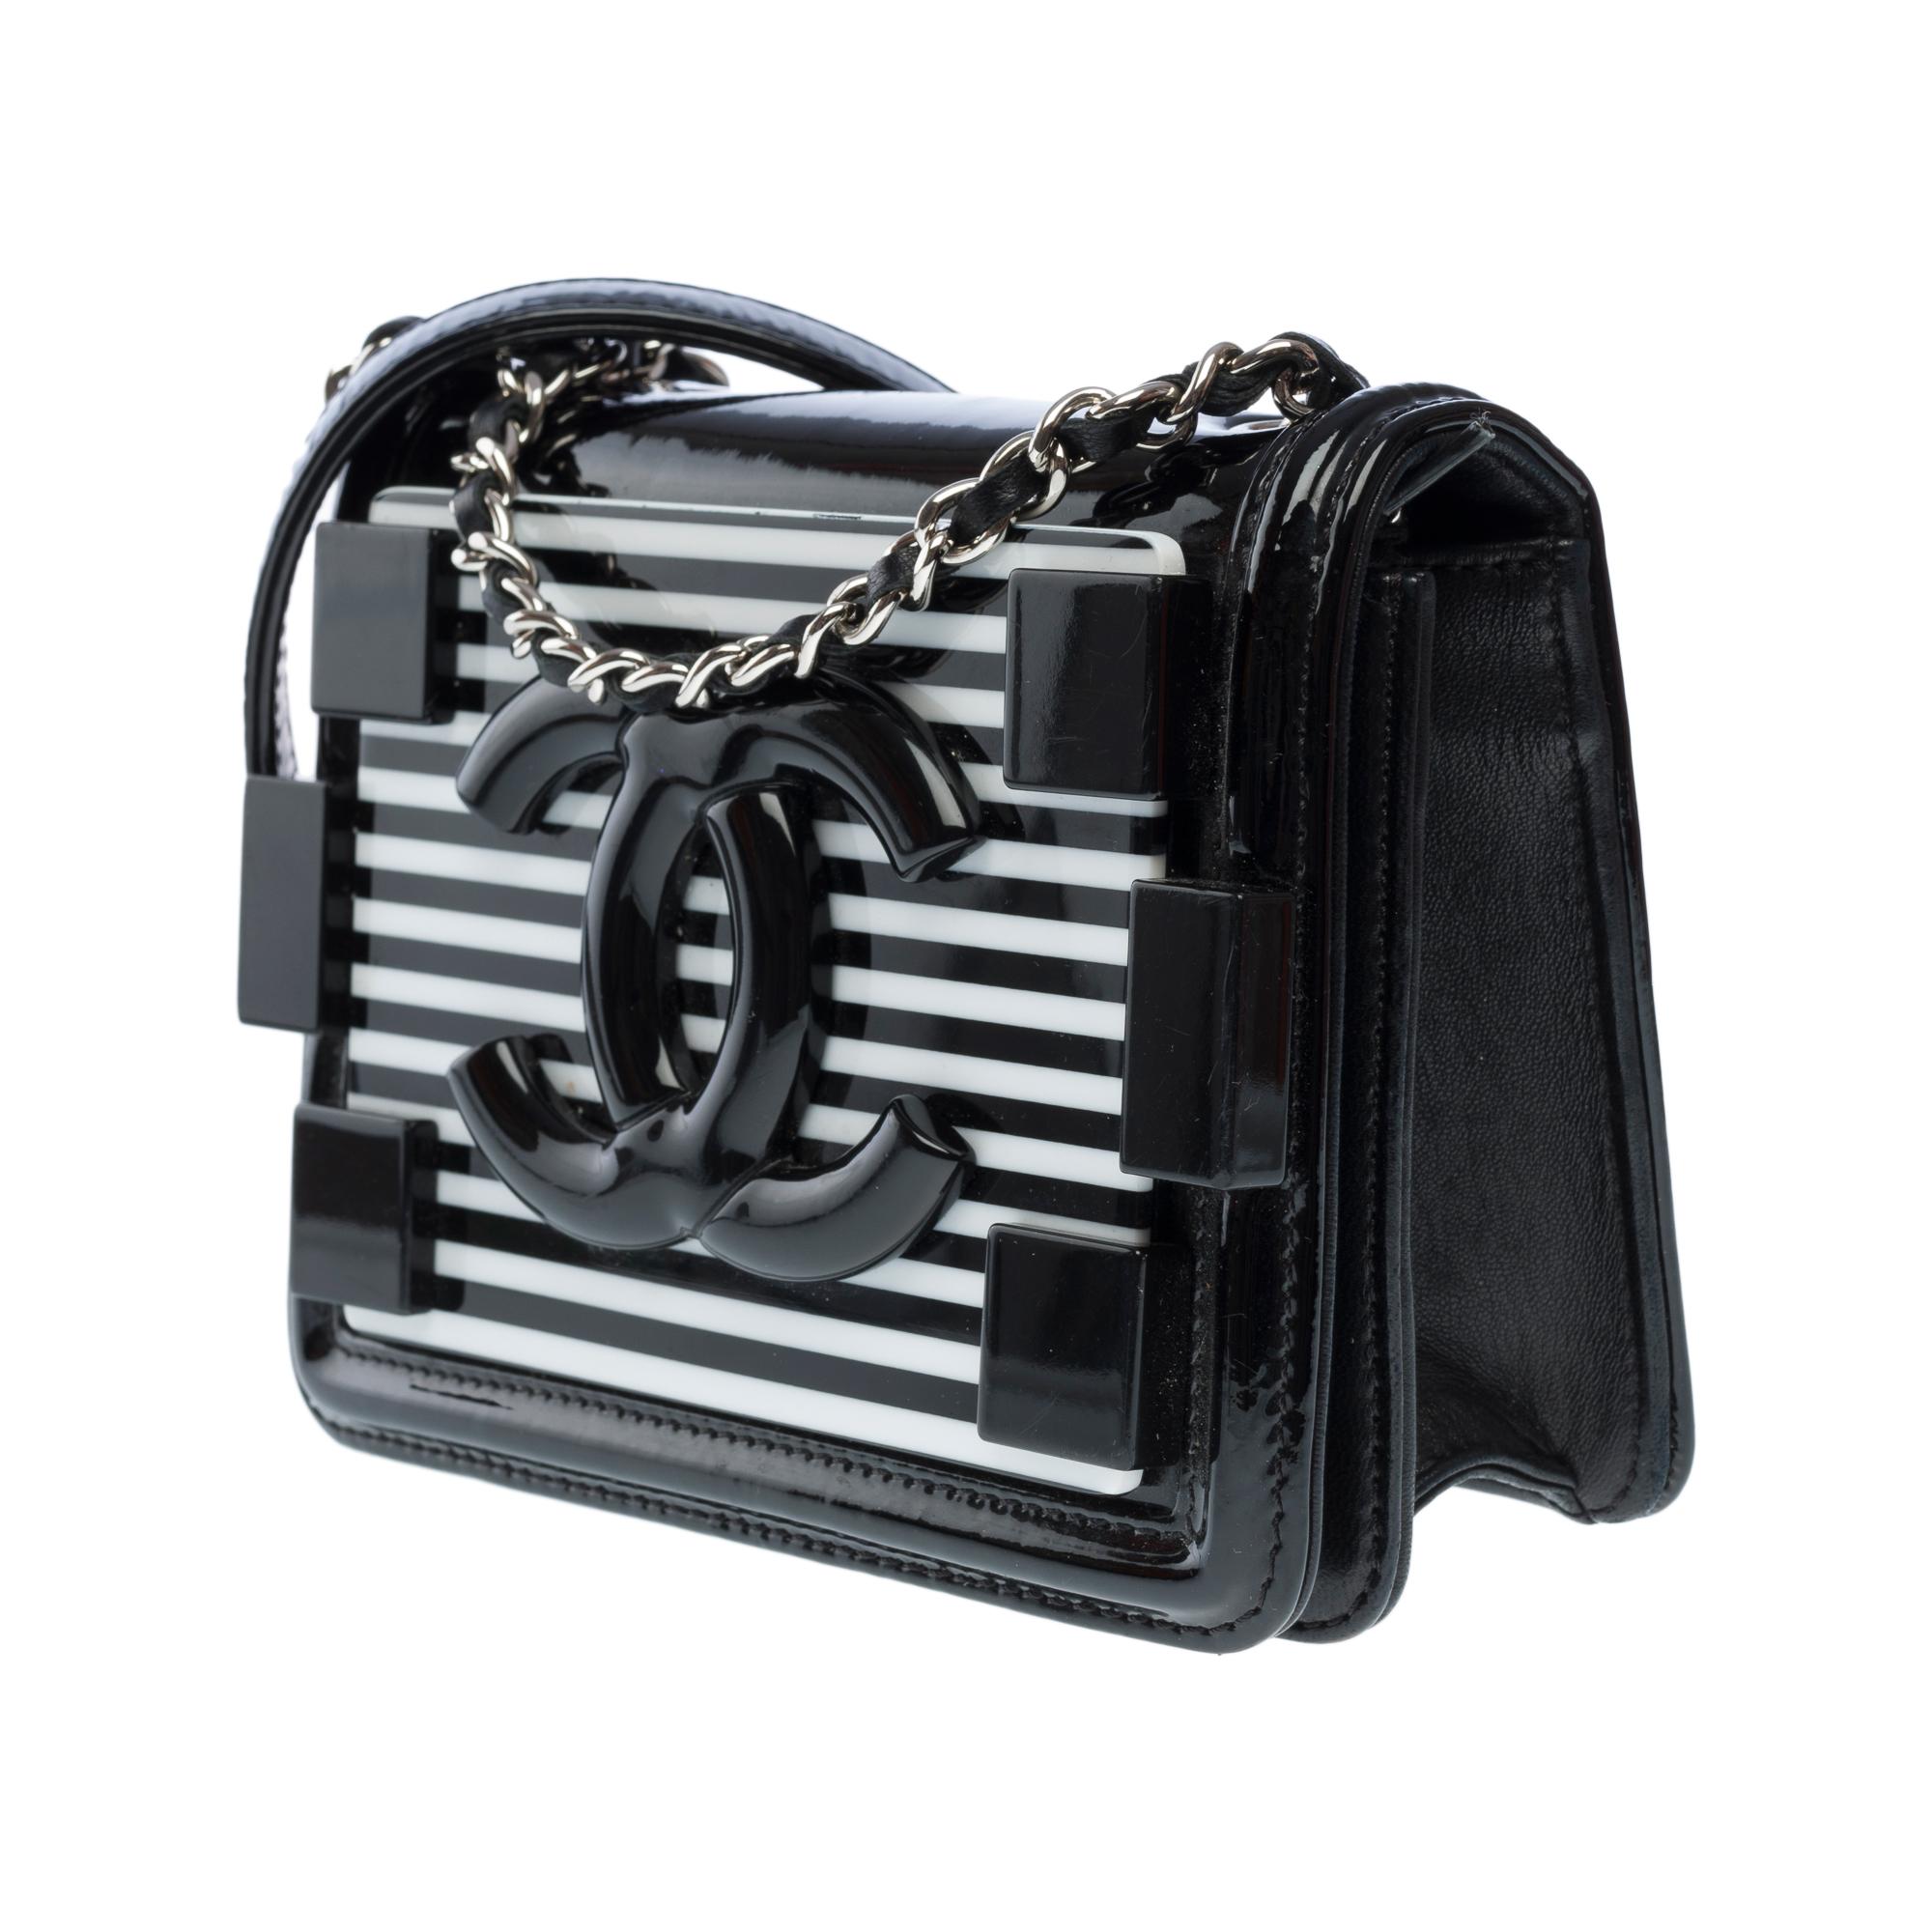 Limited edition Chanel Mini Lego Brick shoulder flap bag in Black leather, SHW For Sale 1